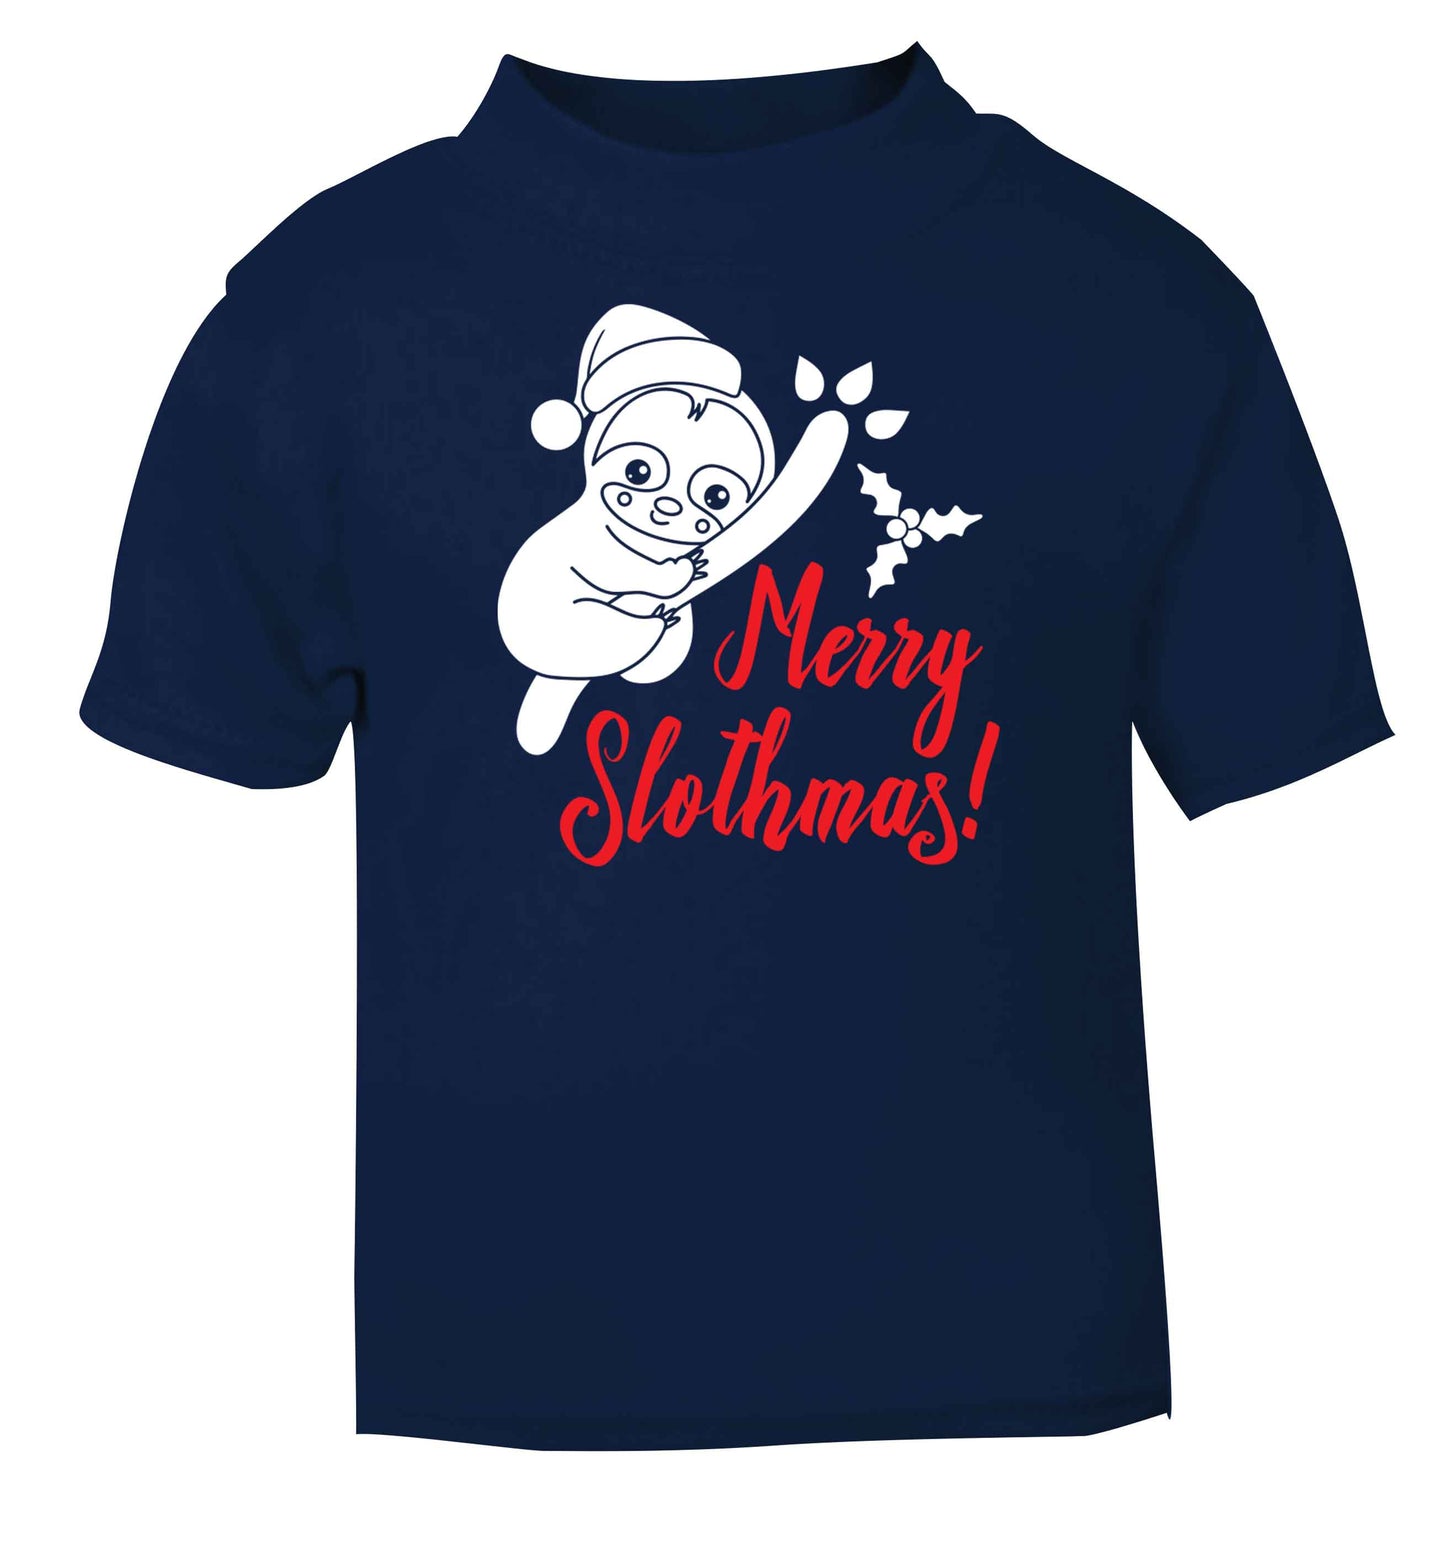 Merry Slothmas navy baby toddler Tshirt 2 Years